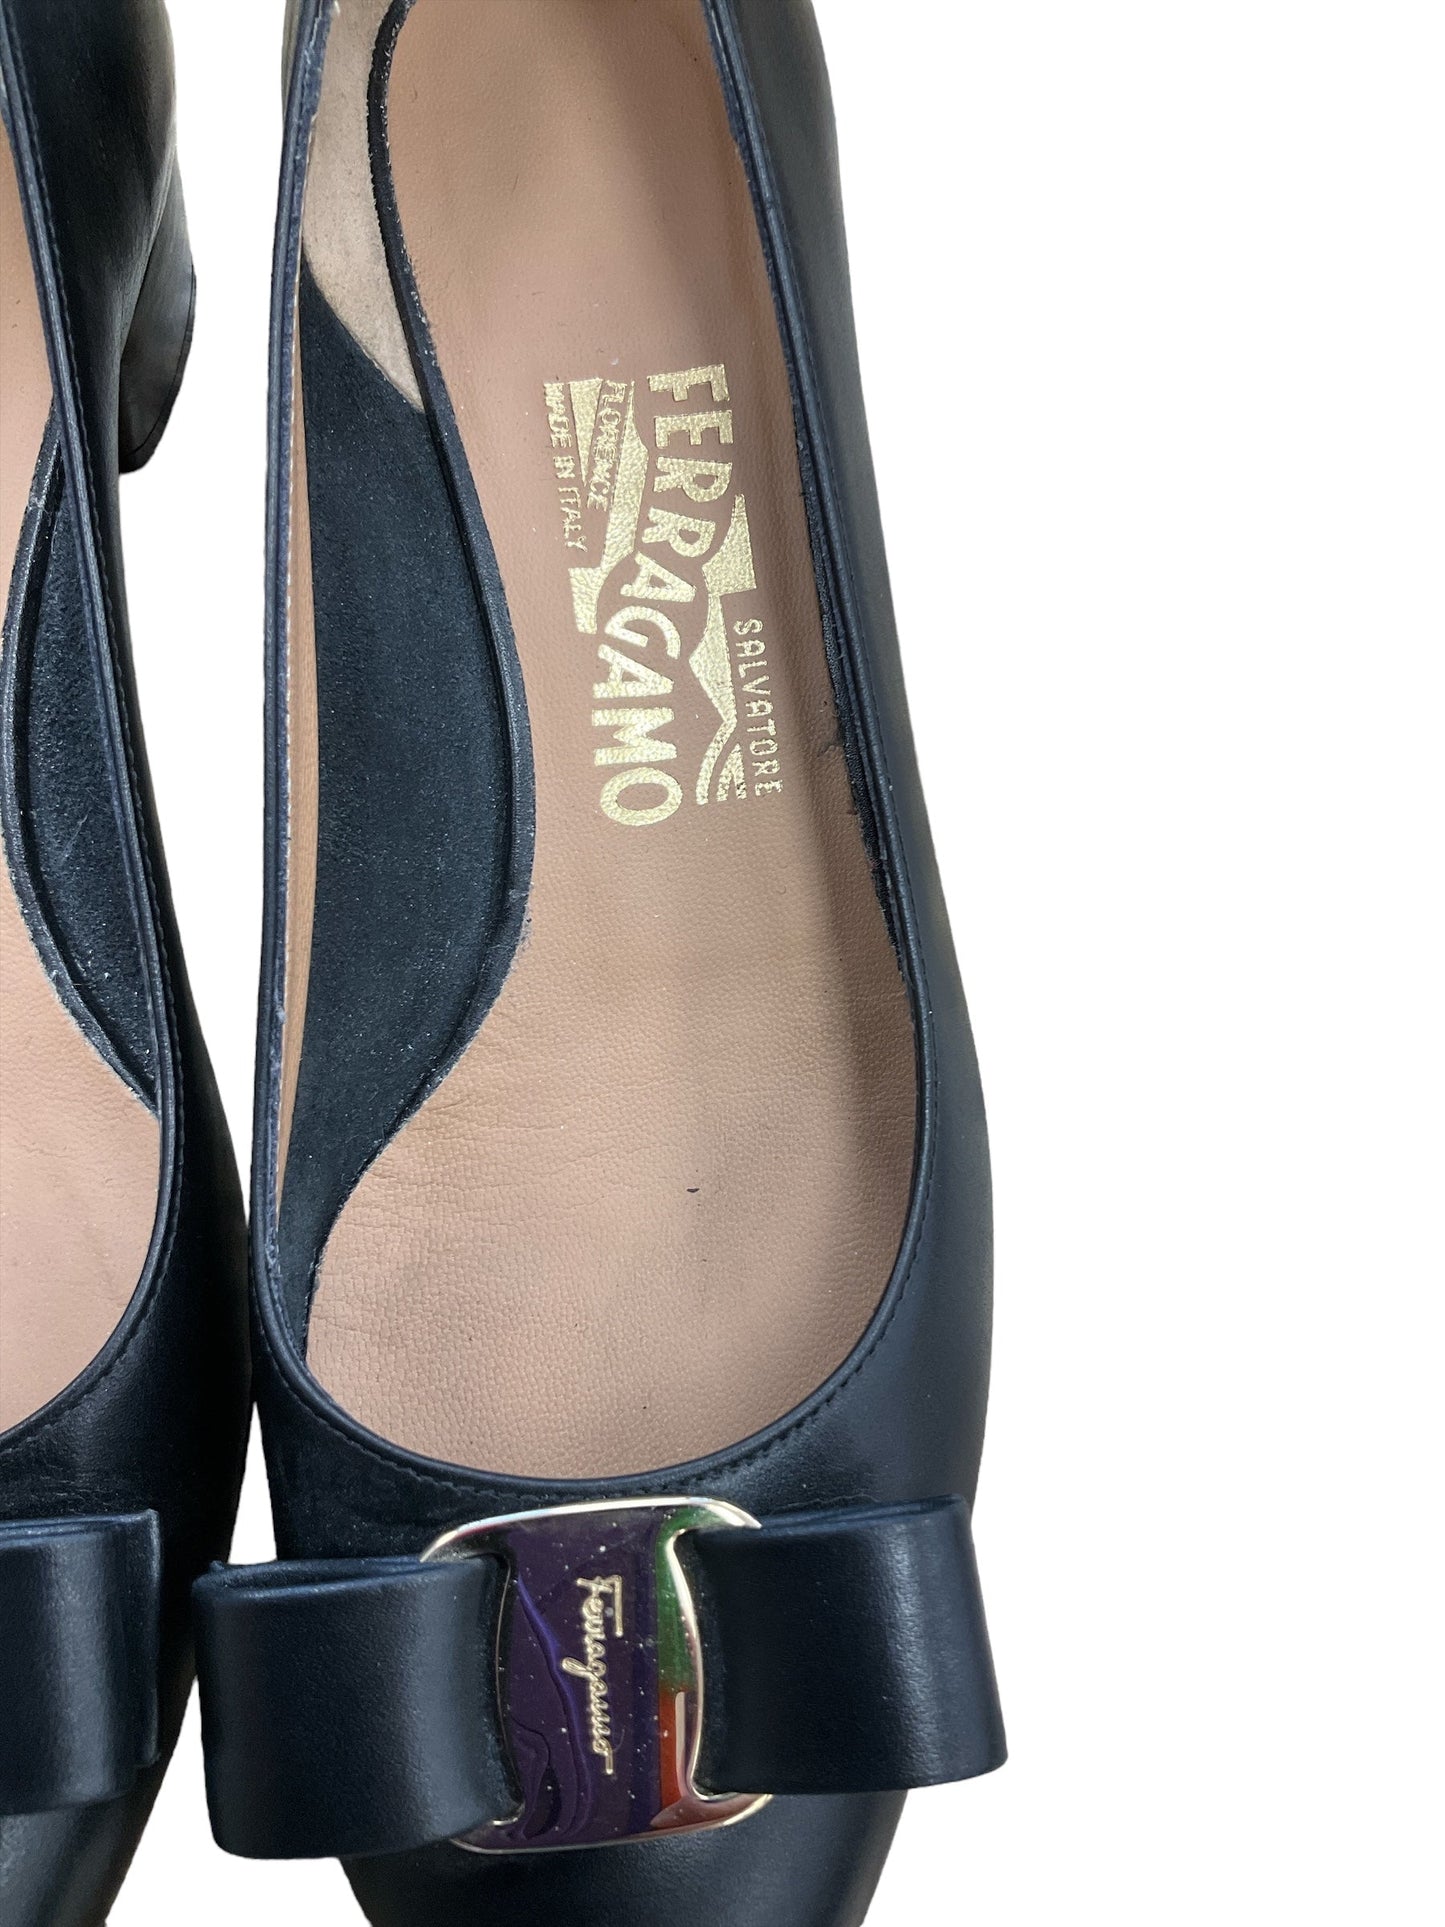 Black Shoes Heels Block Ferragamo, Size 6.5